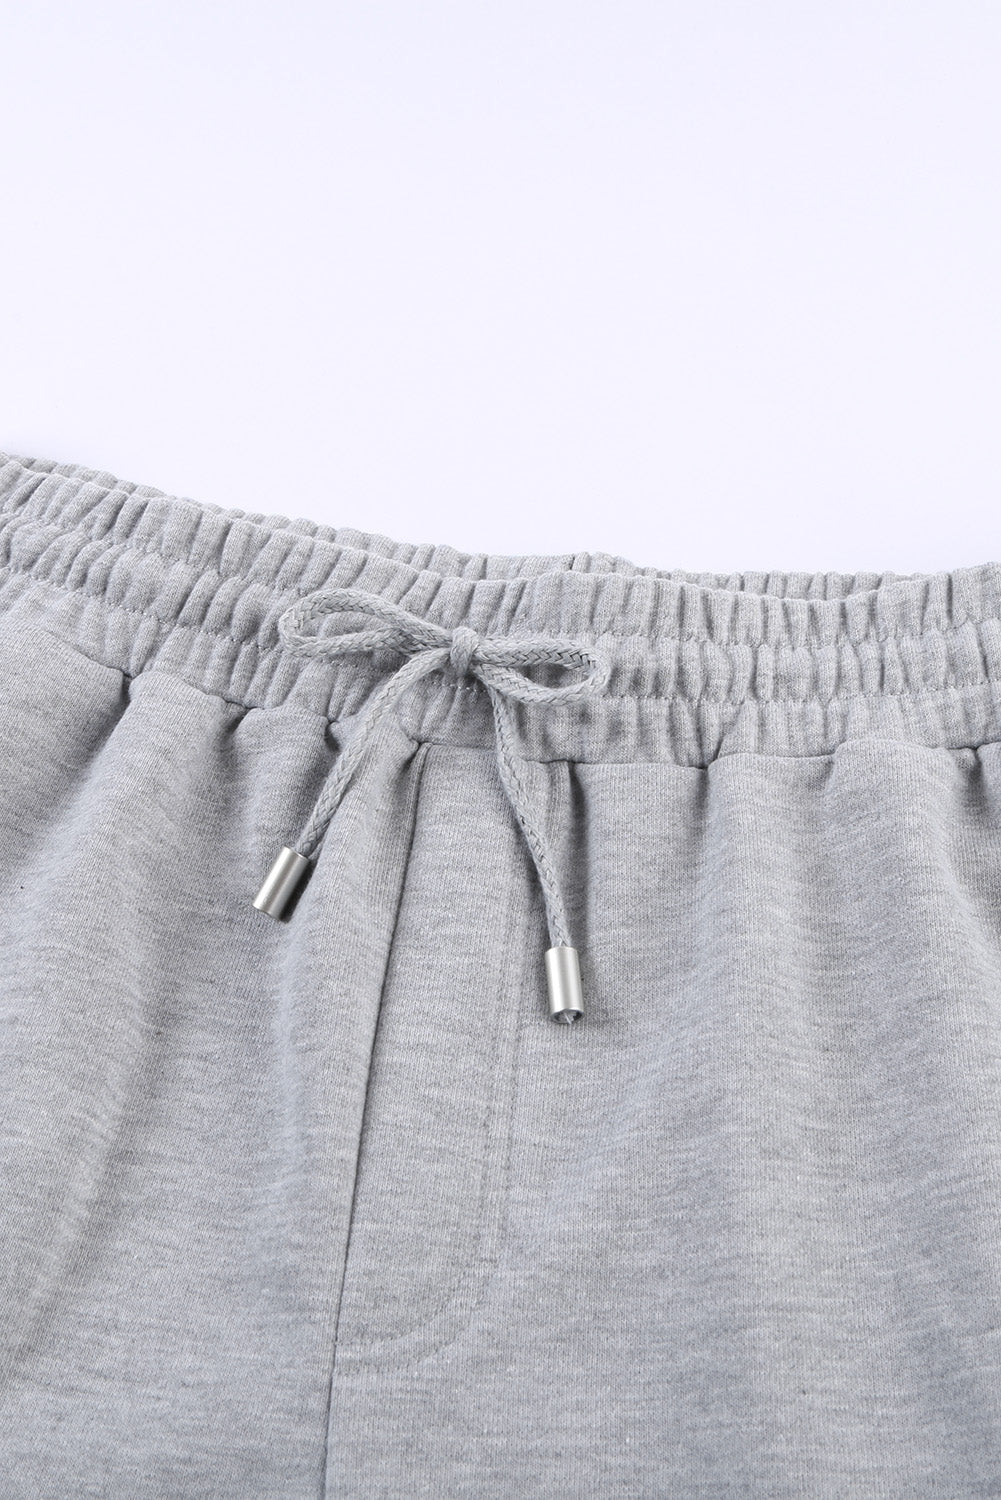 Drawstring Waist Cuffed Shorts Print on any thing USA/STOD clothes